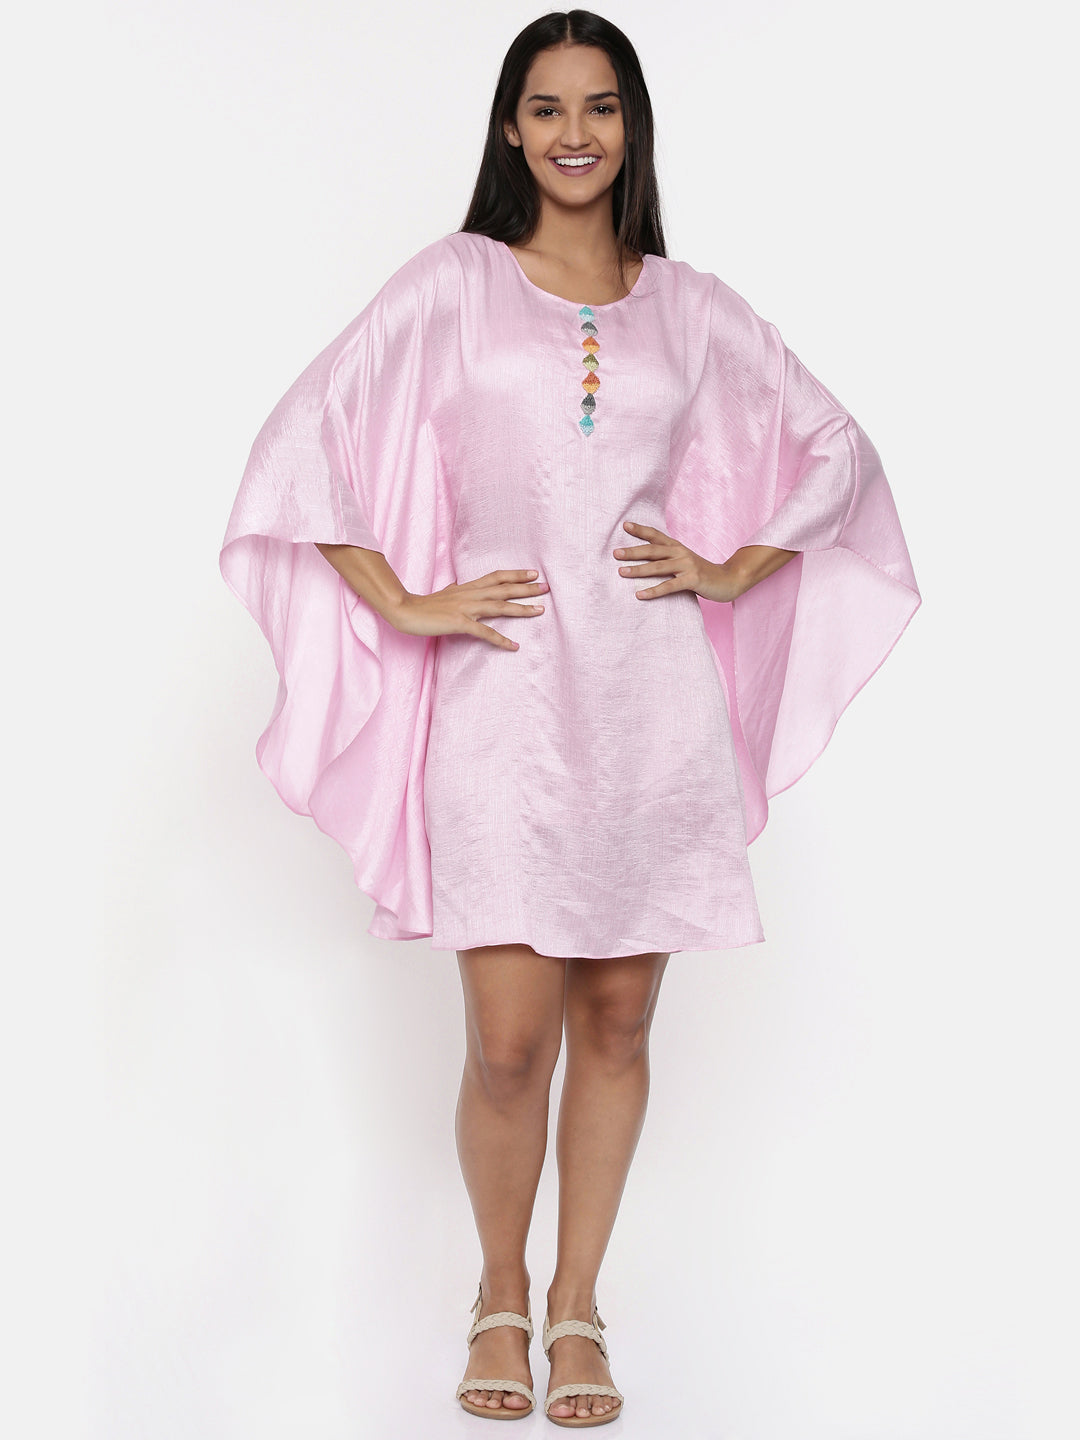 Light pink, cotton silk kaftan dress with knot embroidery - AS0309 - Asmi Shop